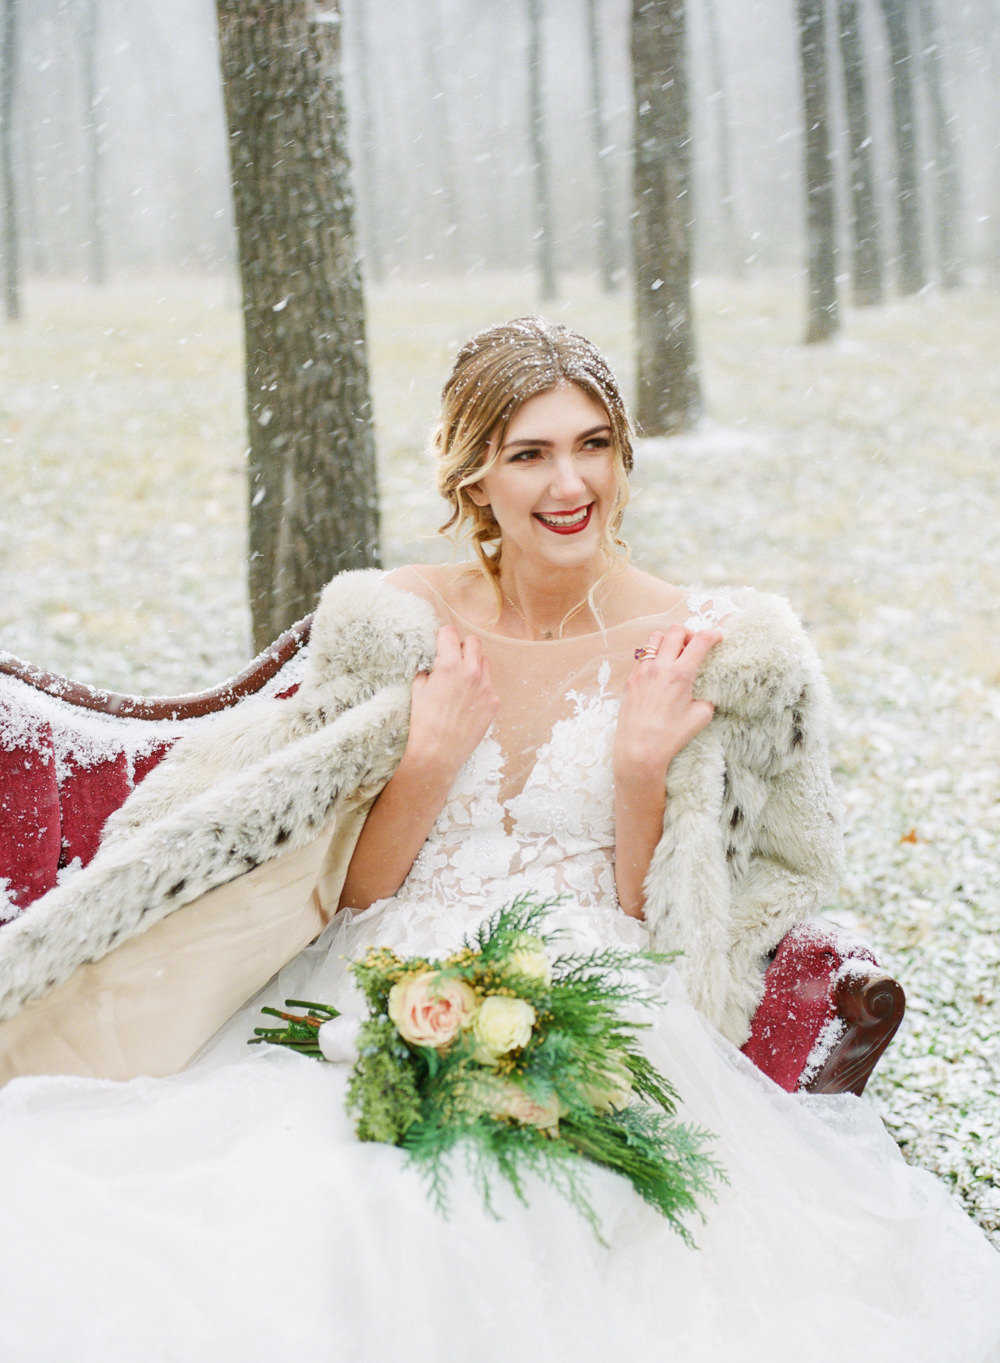 Winter Wonderland Wedding Inspiration - Part 1 | Erica Robnett Photography